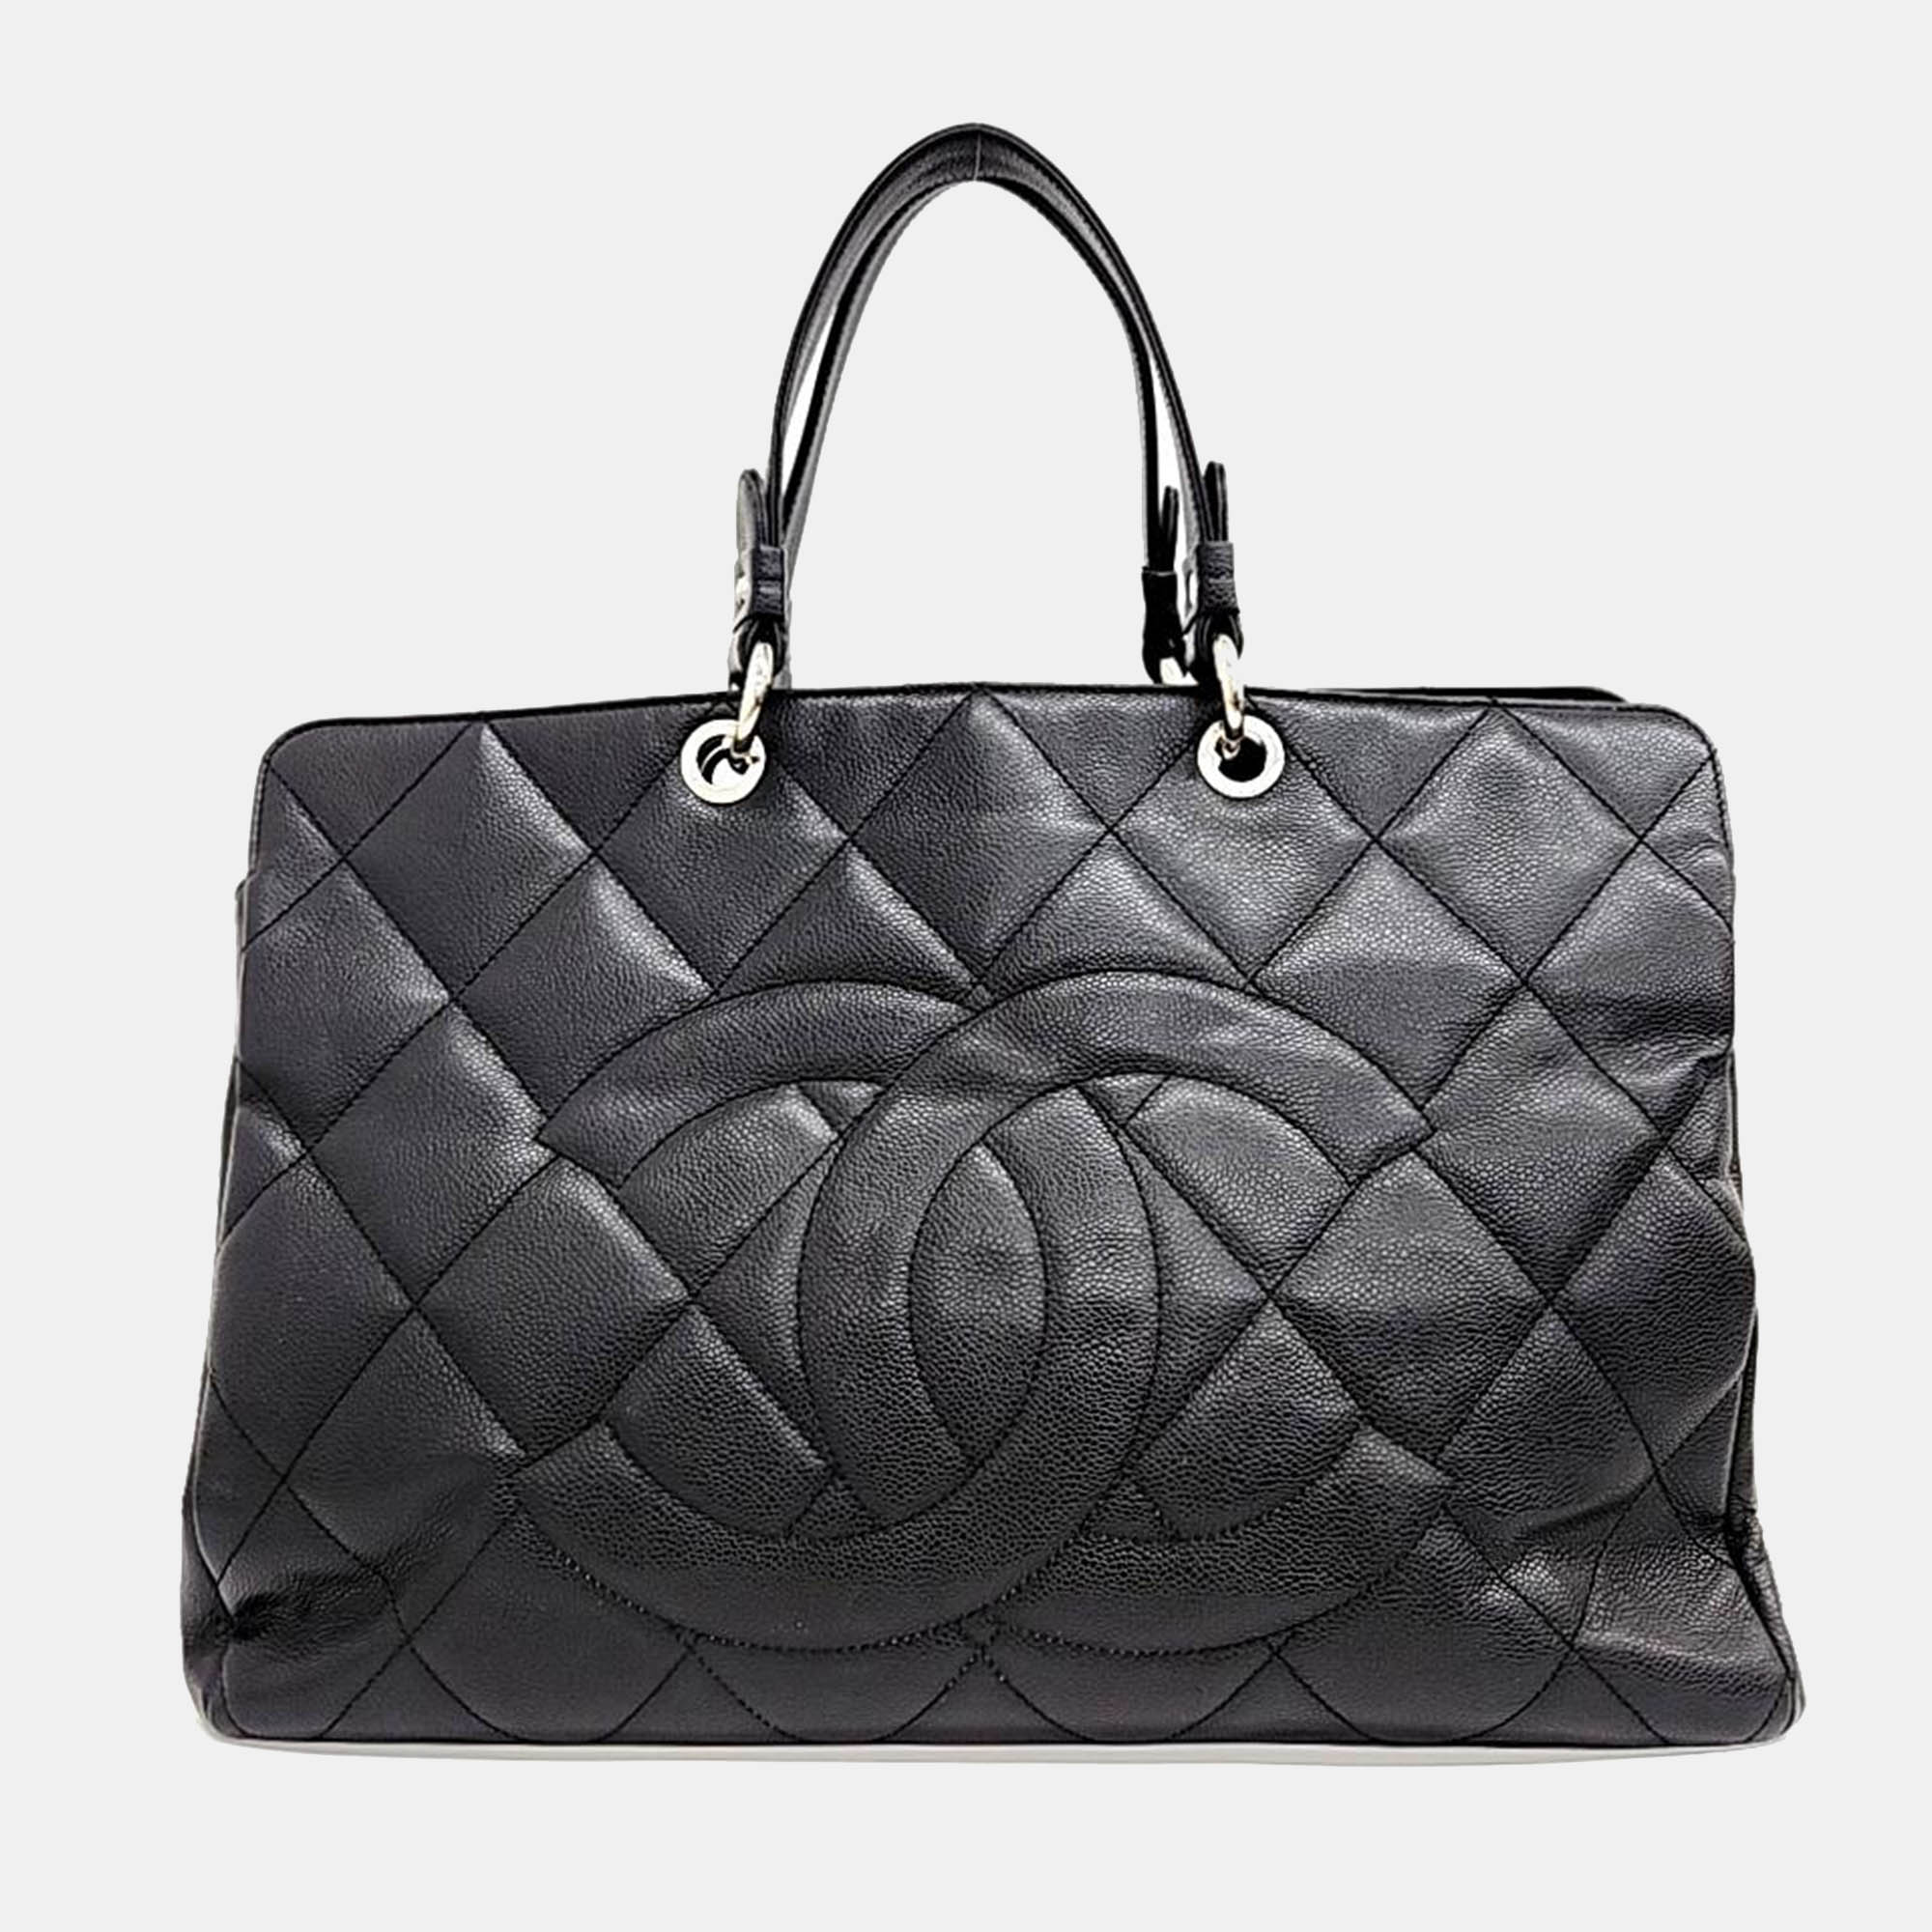 Chanel Black Caviar Tote Bag